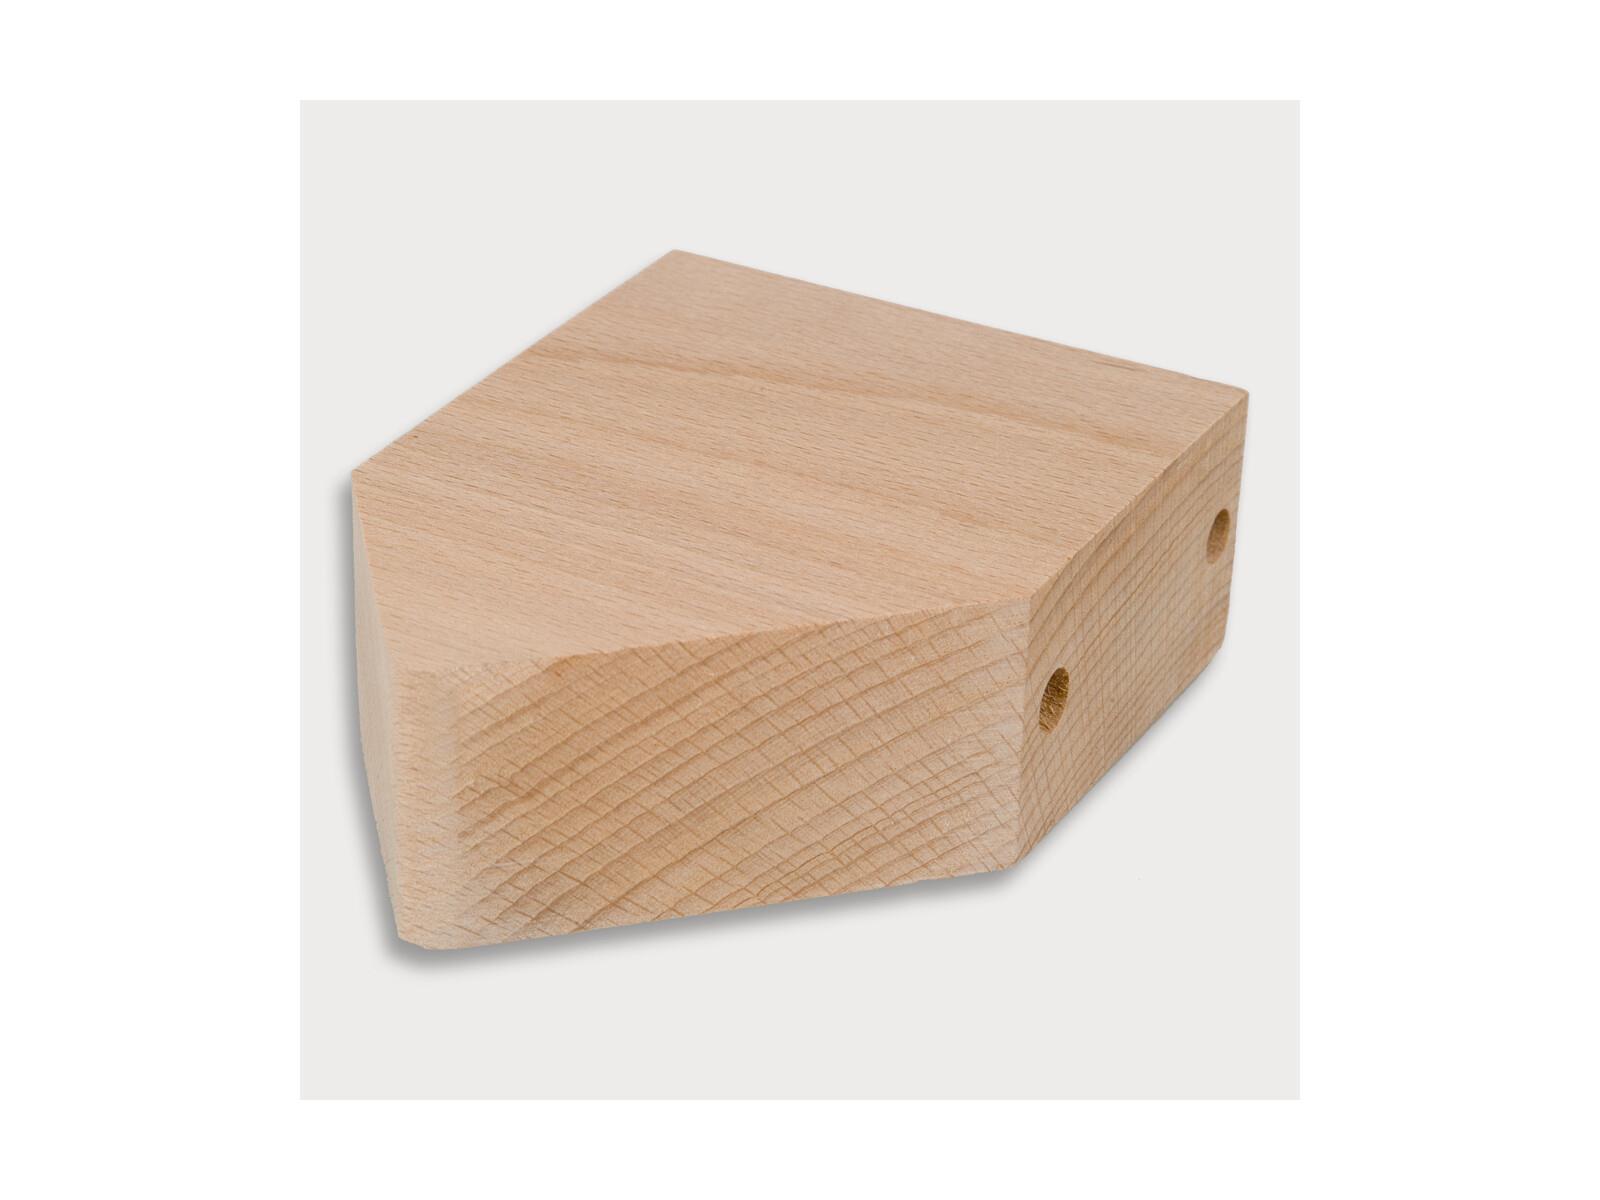 Distanzschräge, unlackiert, K004 aus Holz 12,4 cm